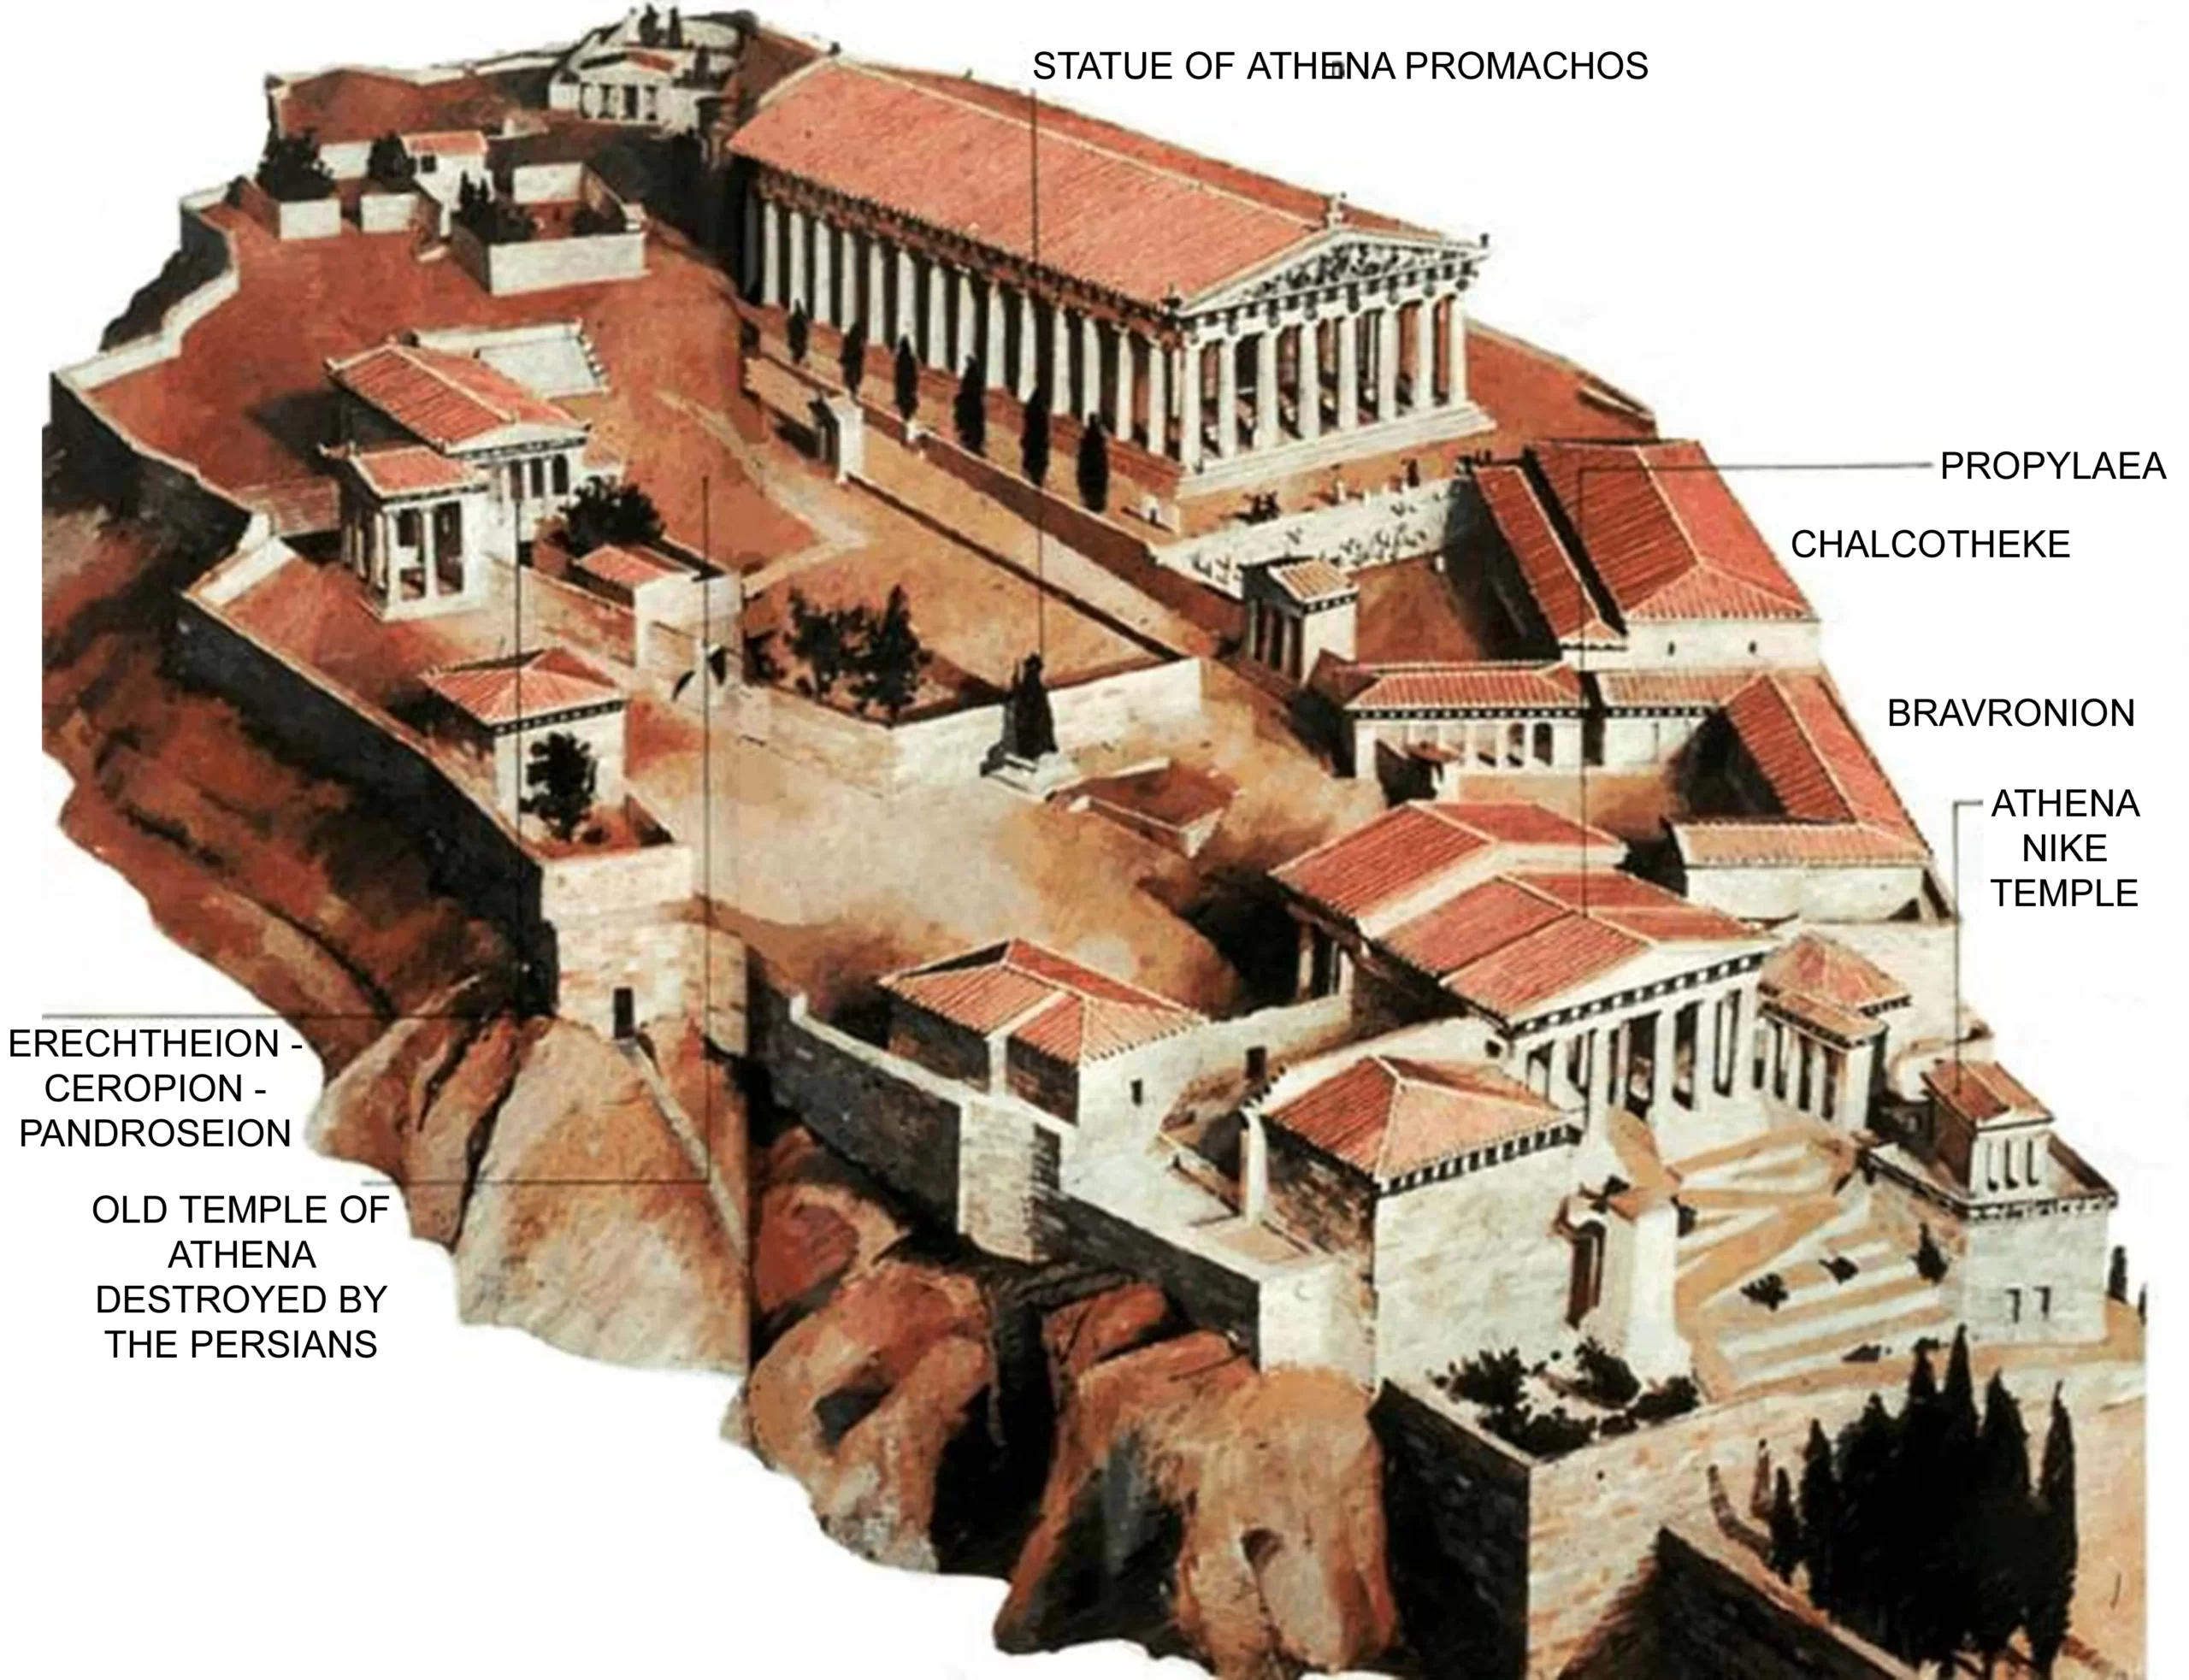 classical greek architecture